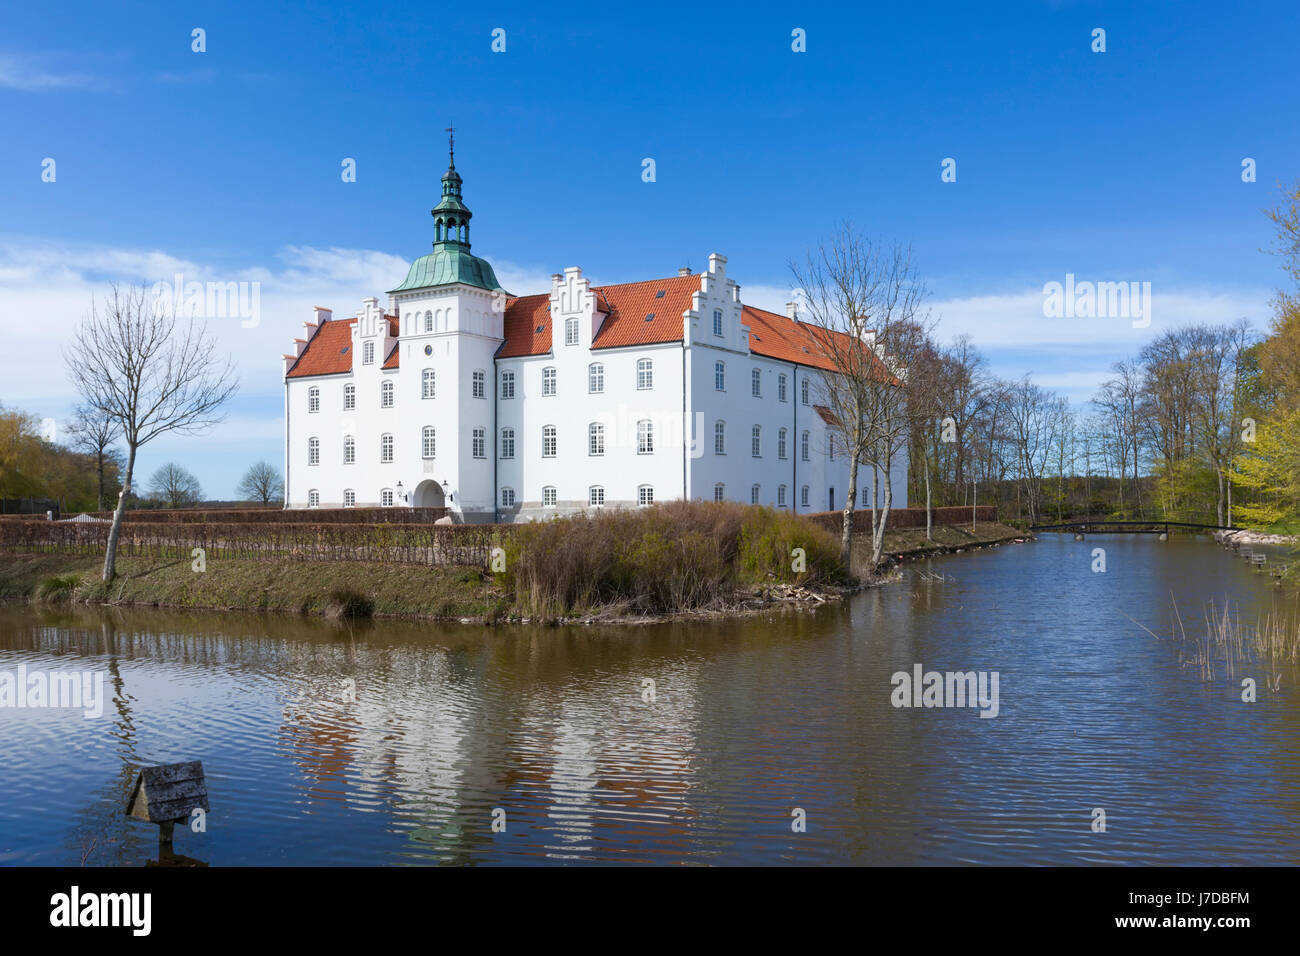 Water castle at Meilgaard, Jutland, Denmark Stock Photo